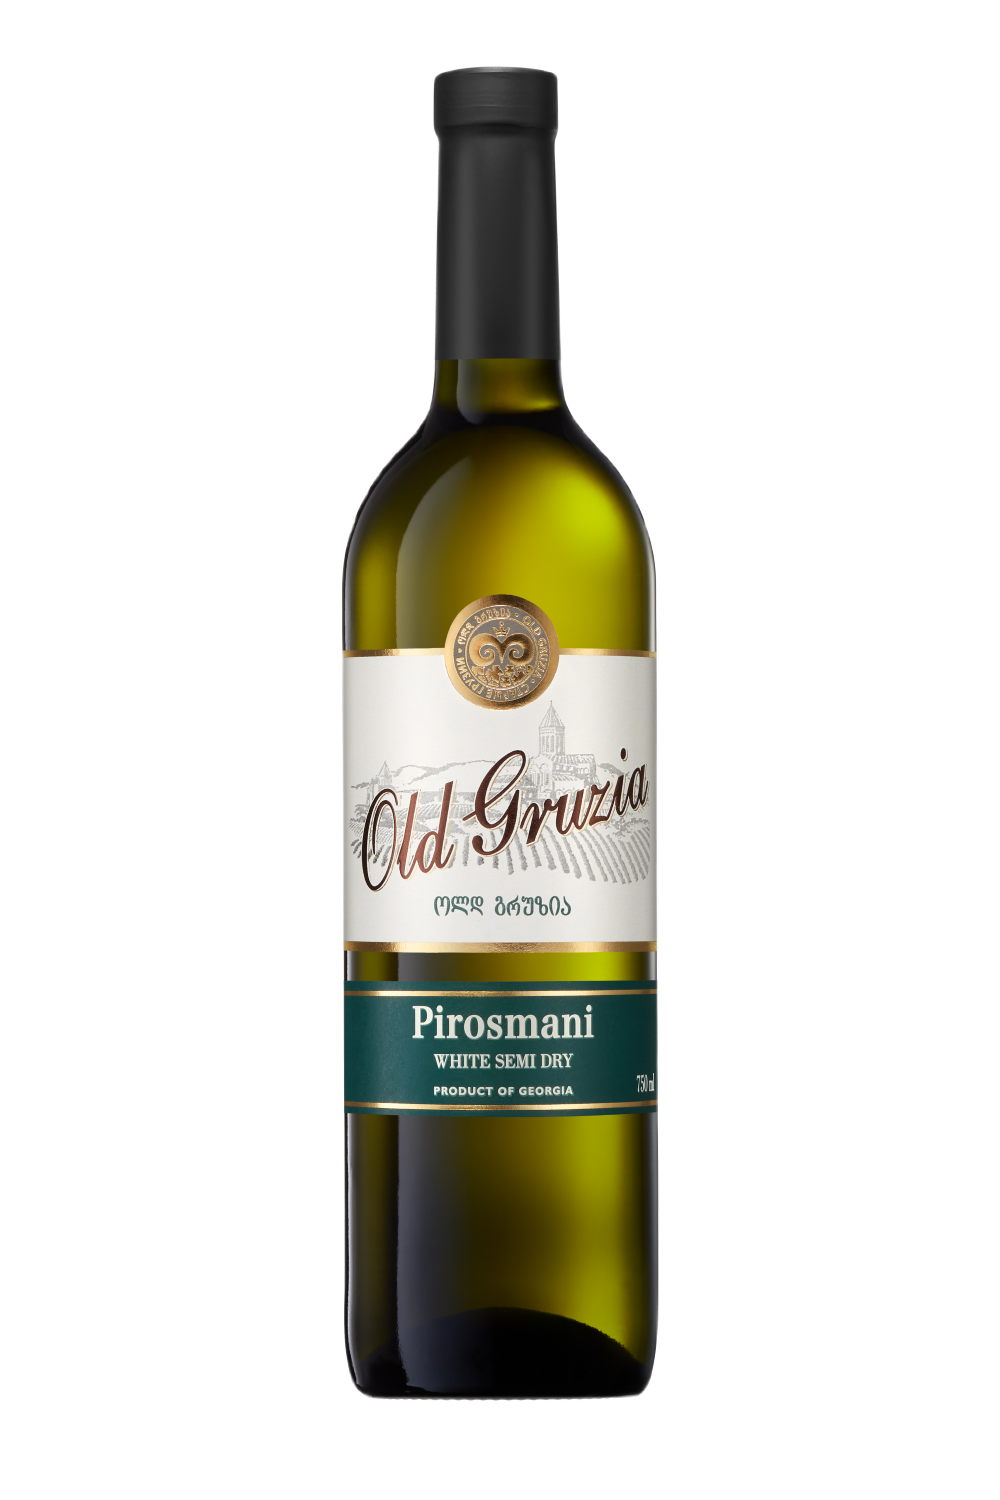 Georgian wines - (Polski) Pirosmani white